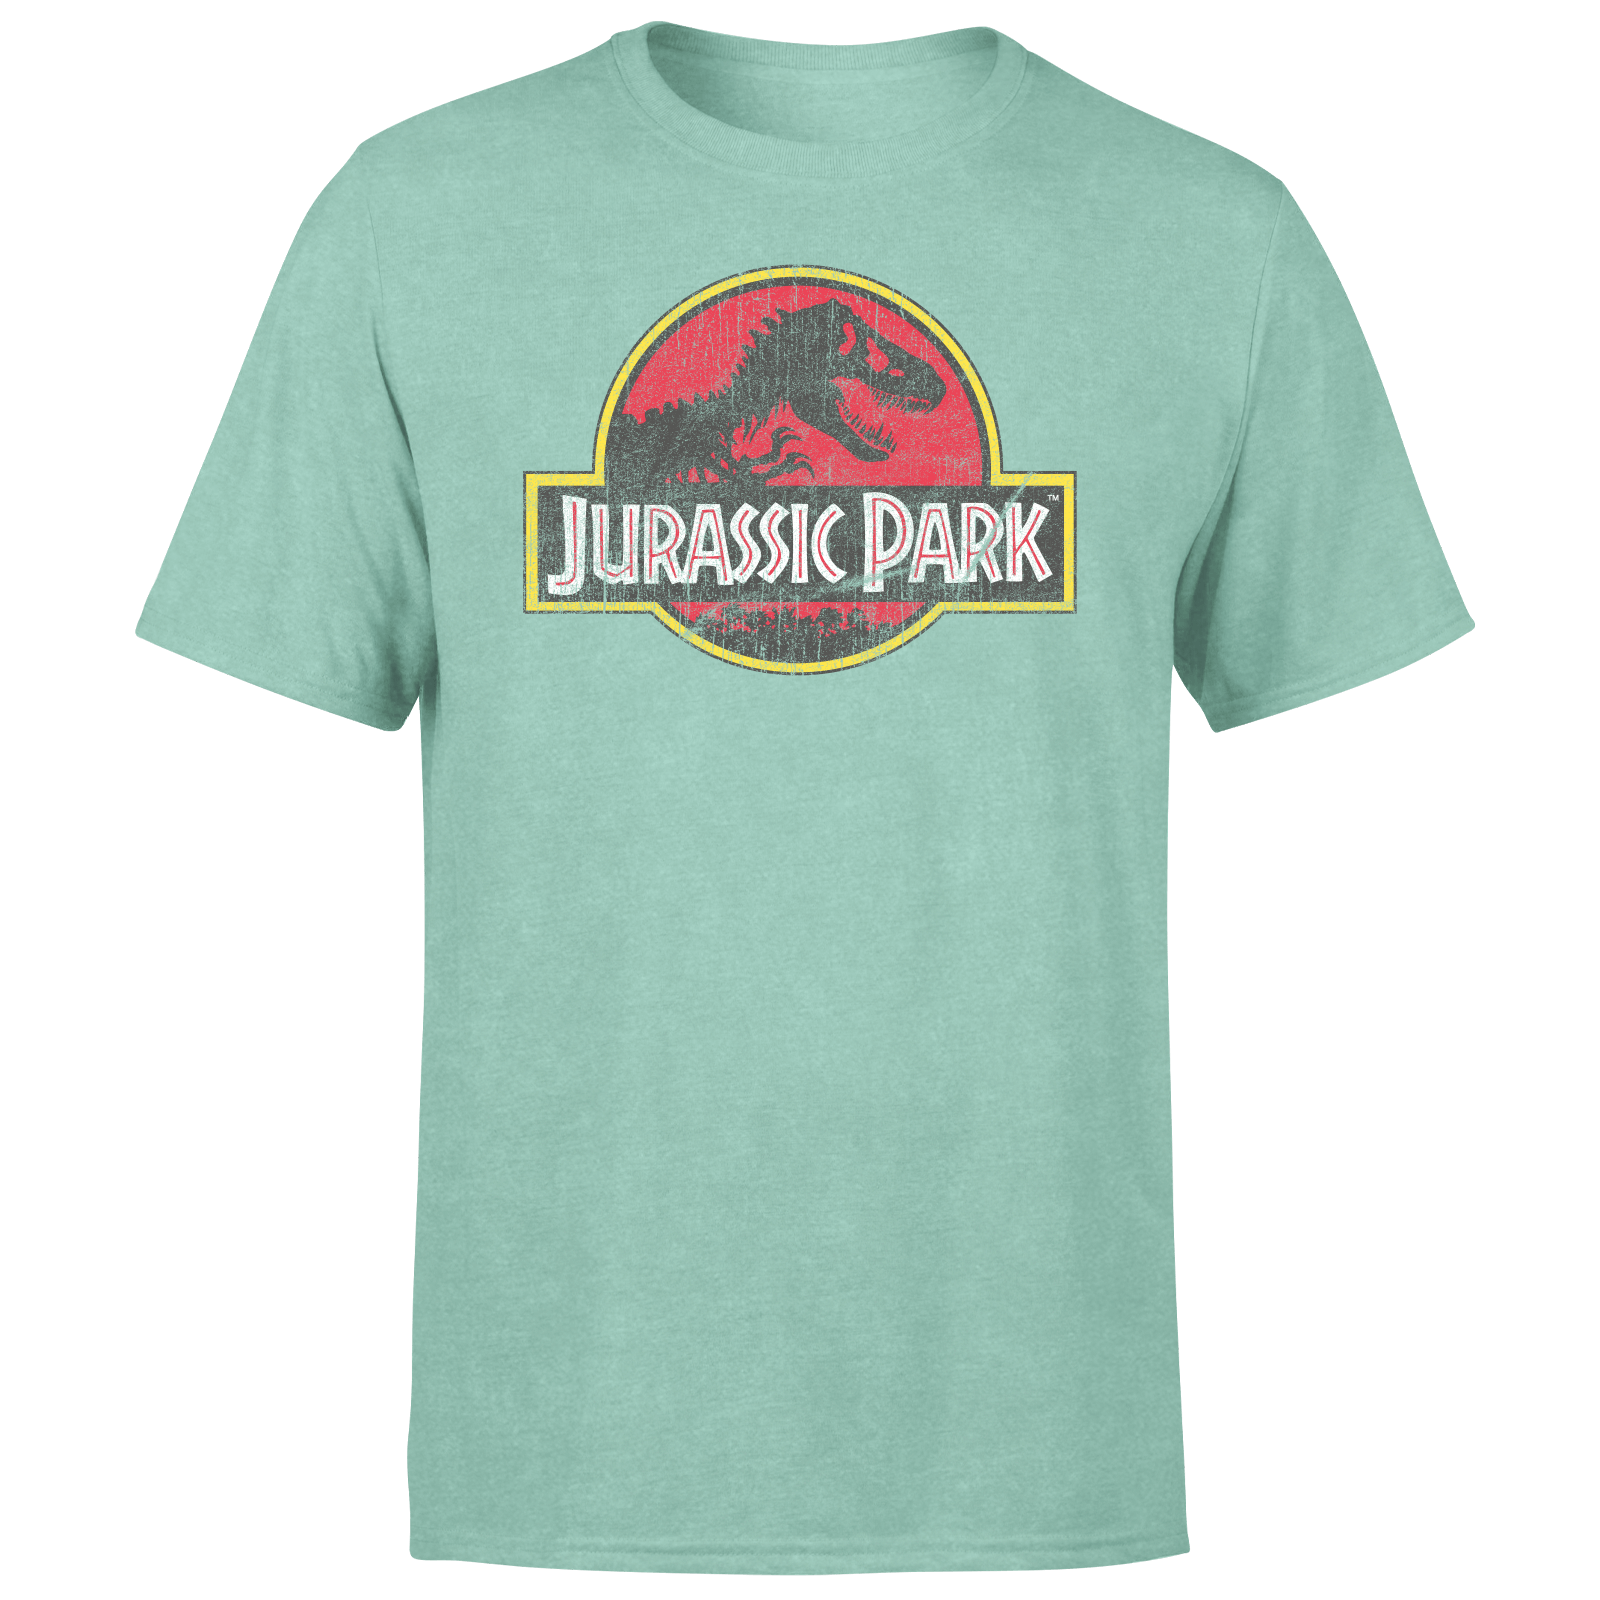 Jurassic Park Logo Vintage Men's T-Shirt - Mint Acid Wash - S - Mint Acid Wash